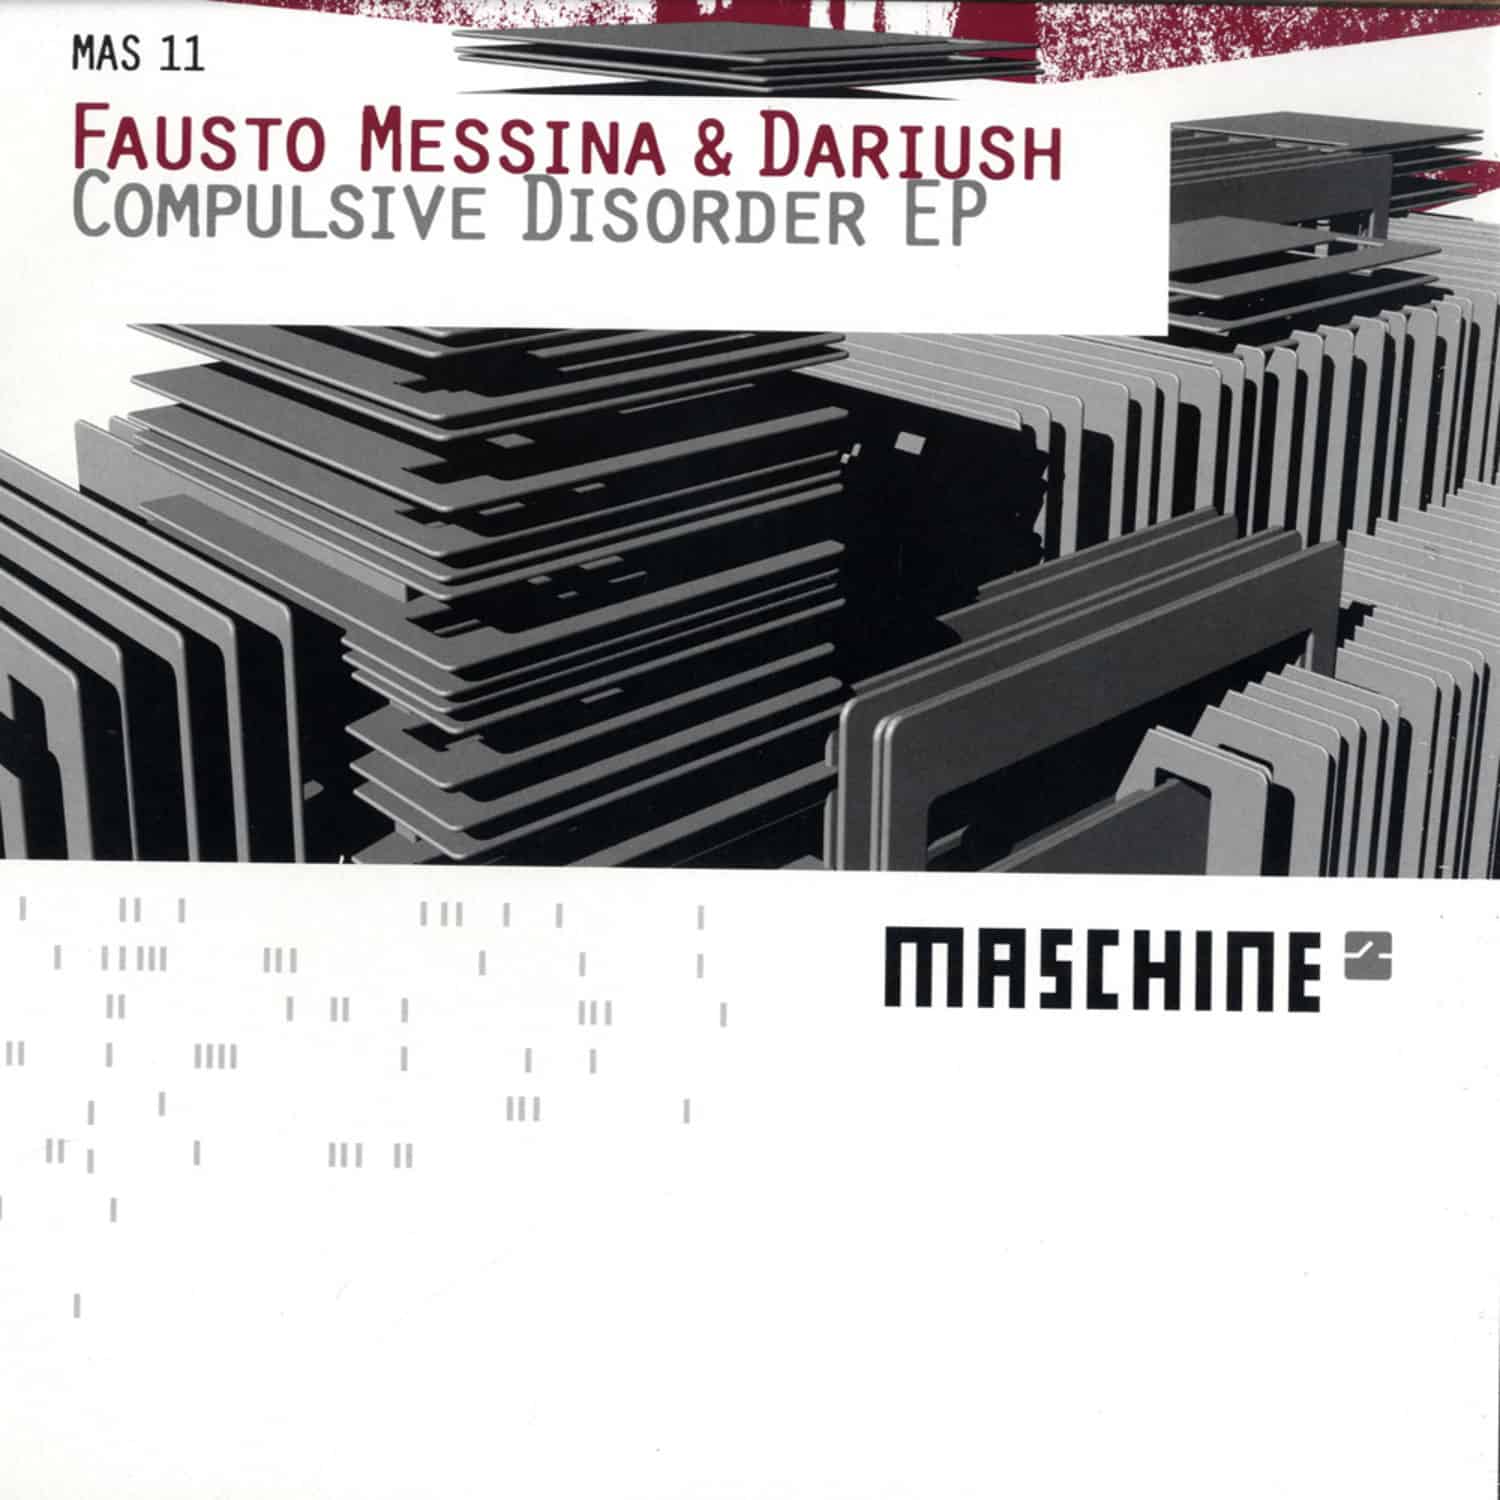 Fausto Messina & Dariush - COMPULSIVE DISORDER EP